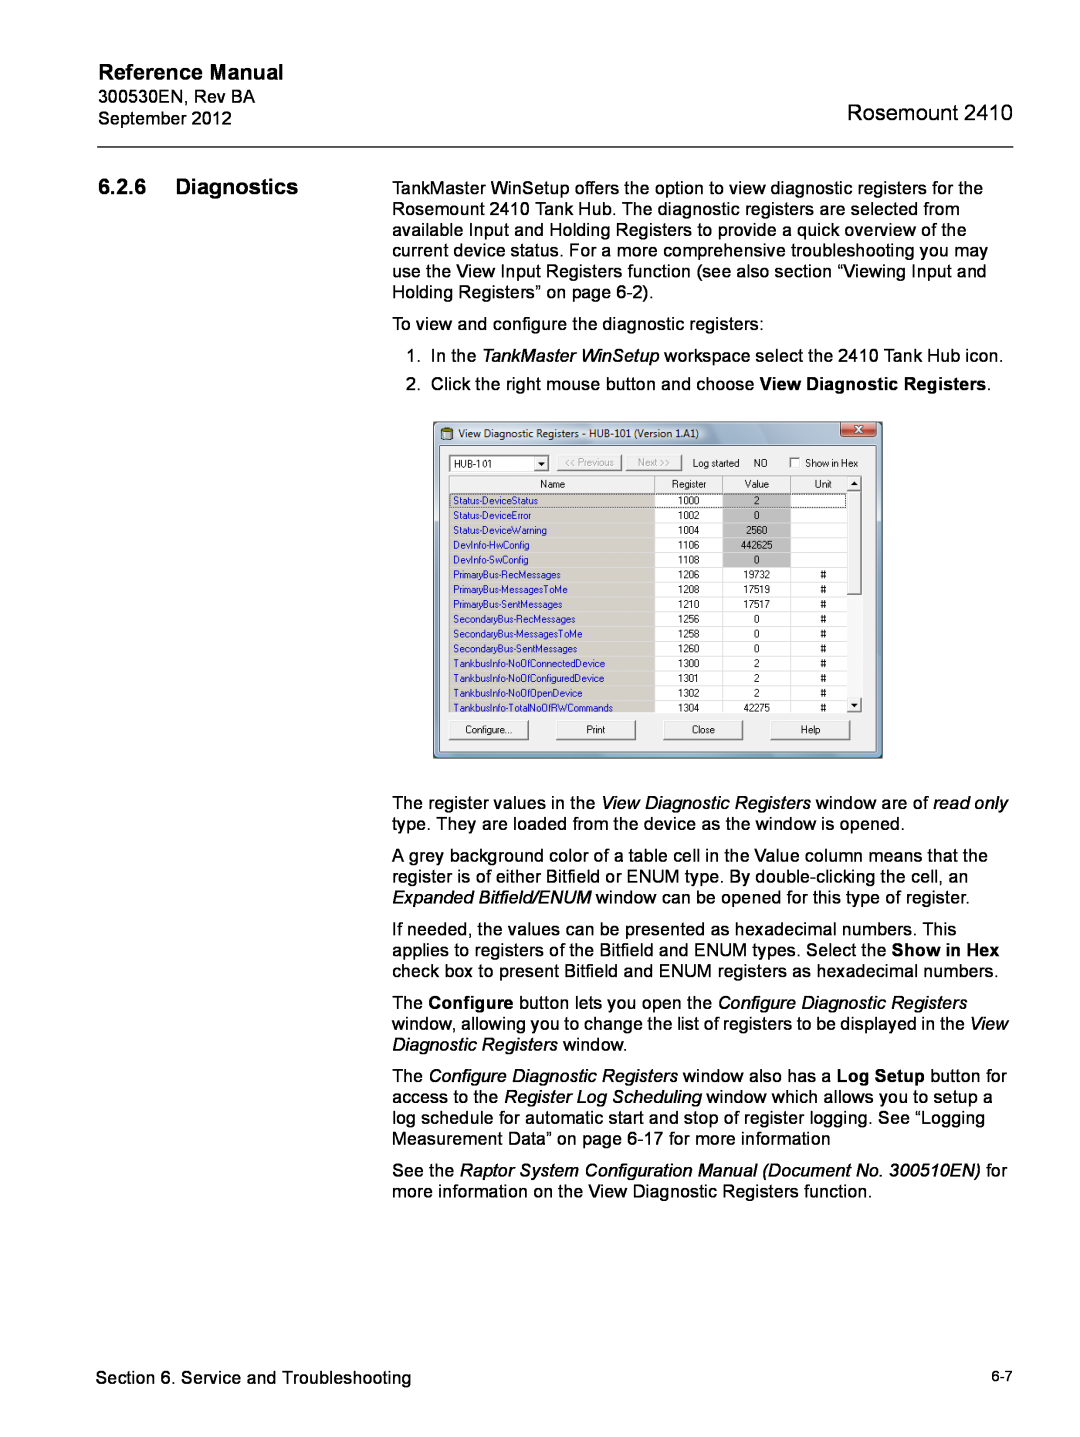 Emerson Process Management Rosemount 2410 manual Diagnostics, Reference Manual 